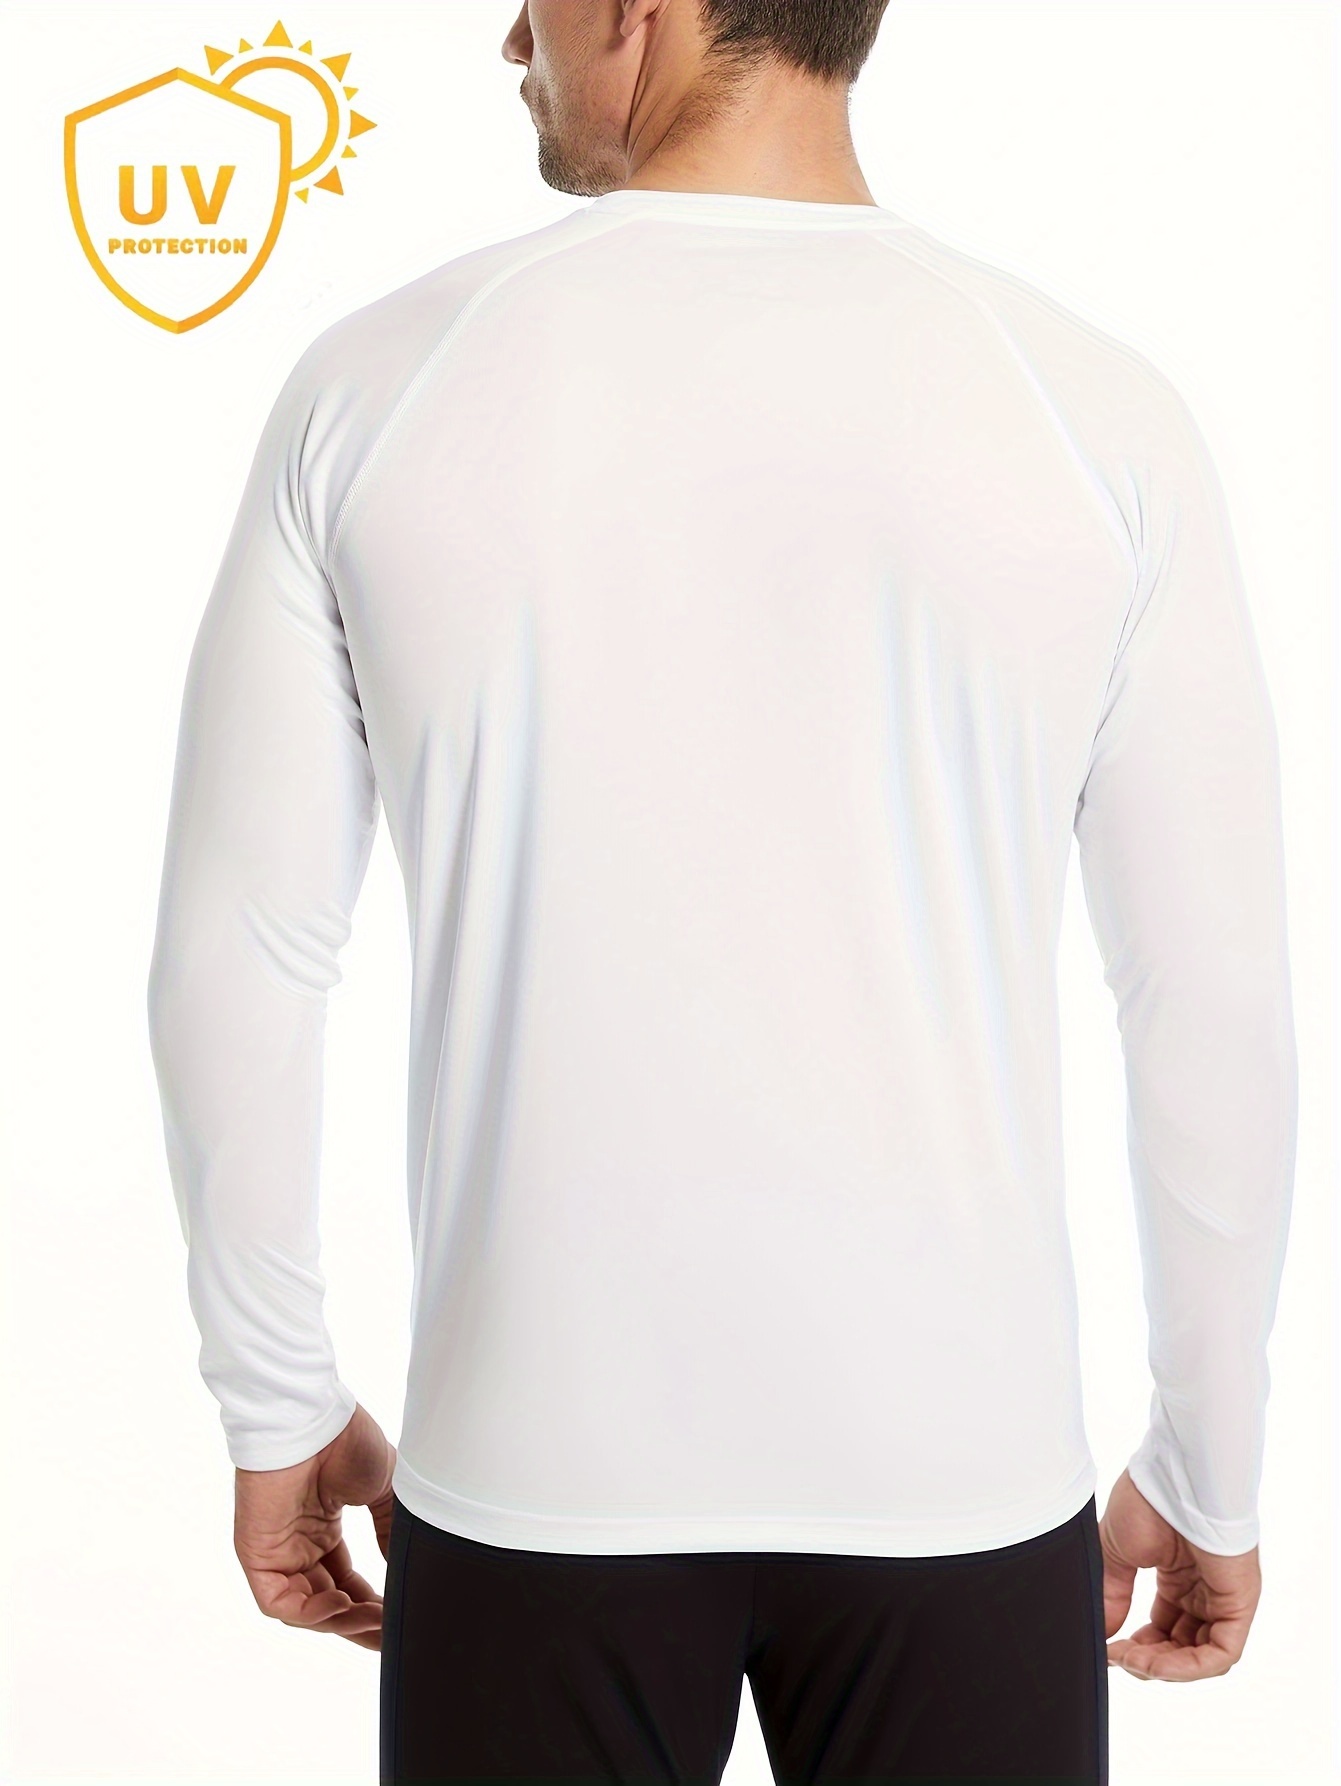 Mens Dry-Fit UPF 50+ Sun Shirt Hooded, Fishing Shirts for Men Long Sleeve,  SPF Shirts for Men, Men's Rash Guard Shirts